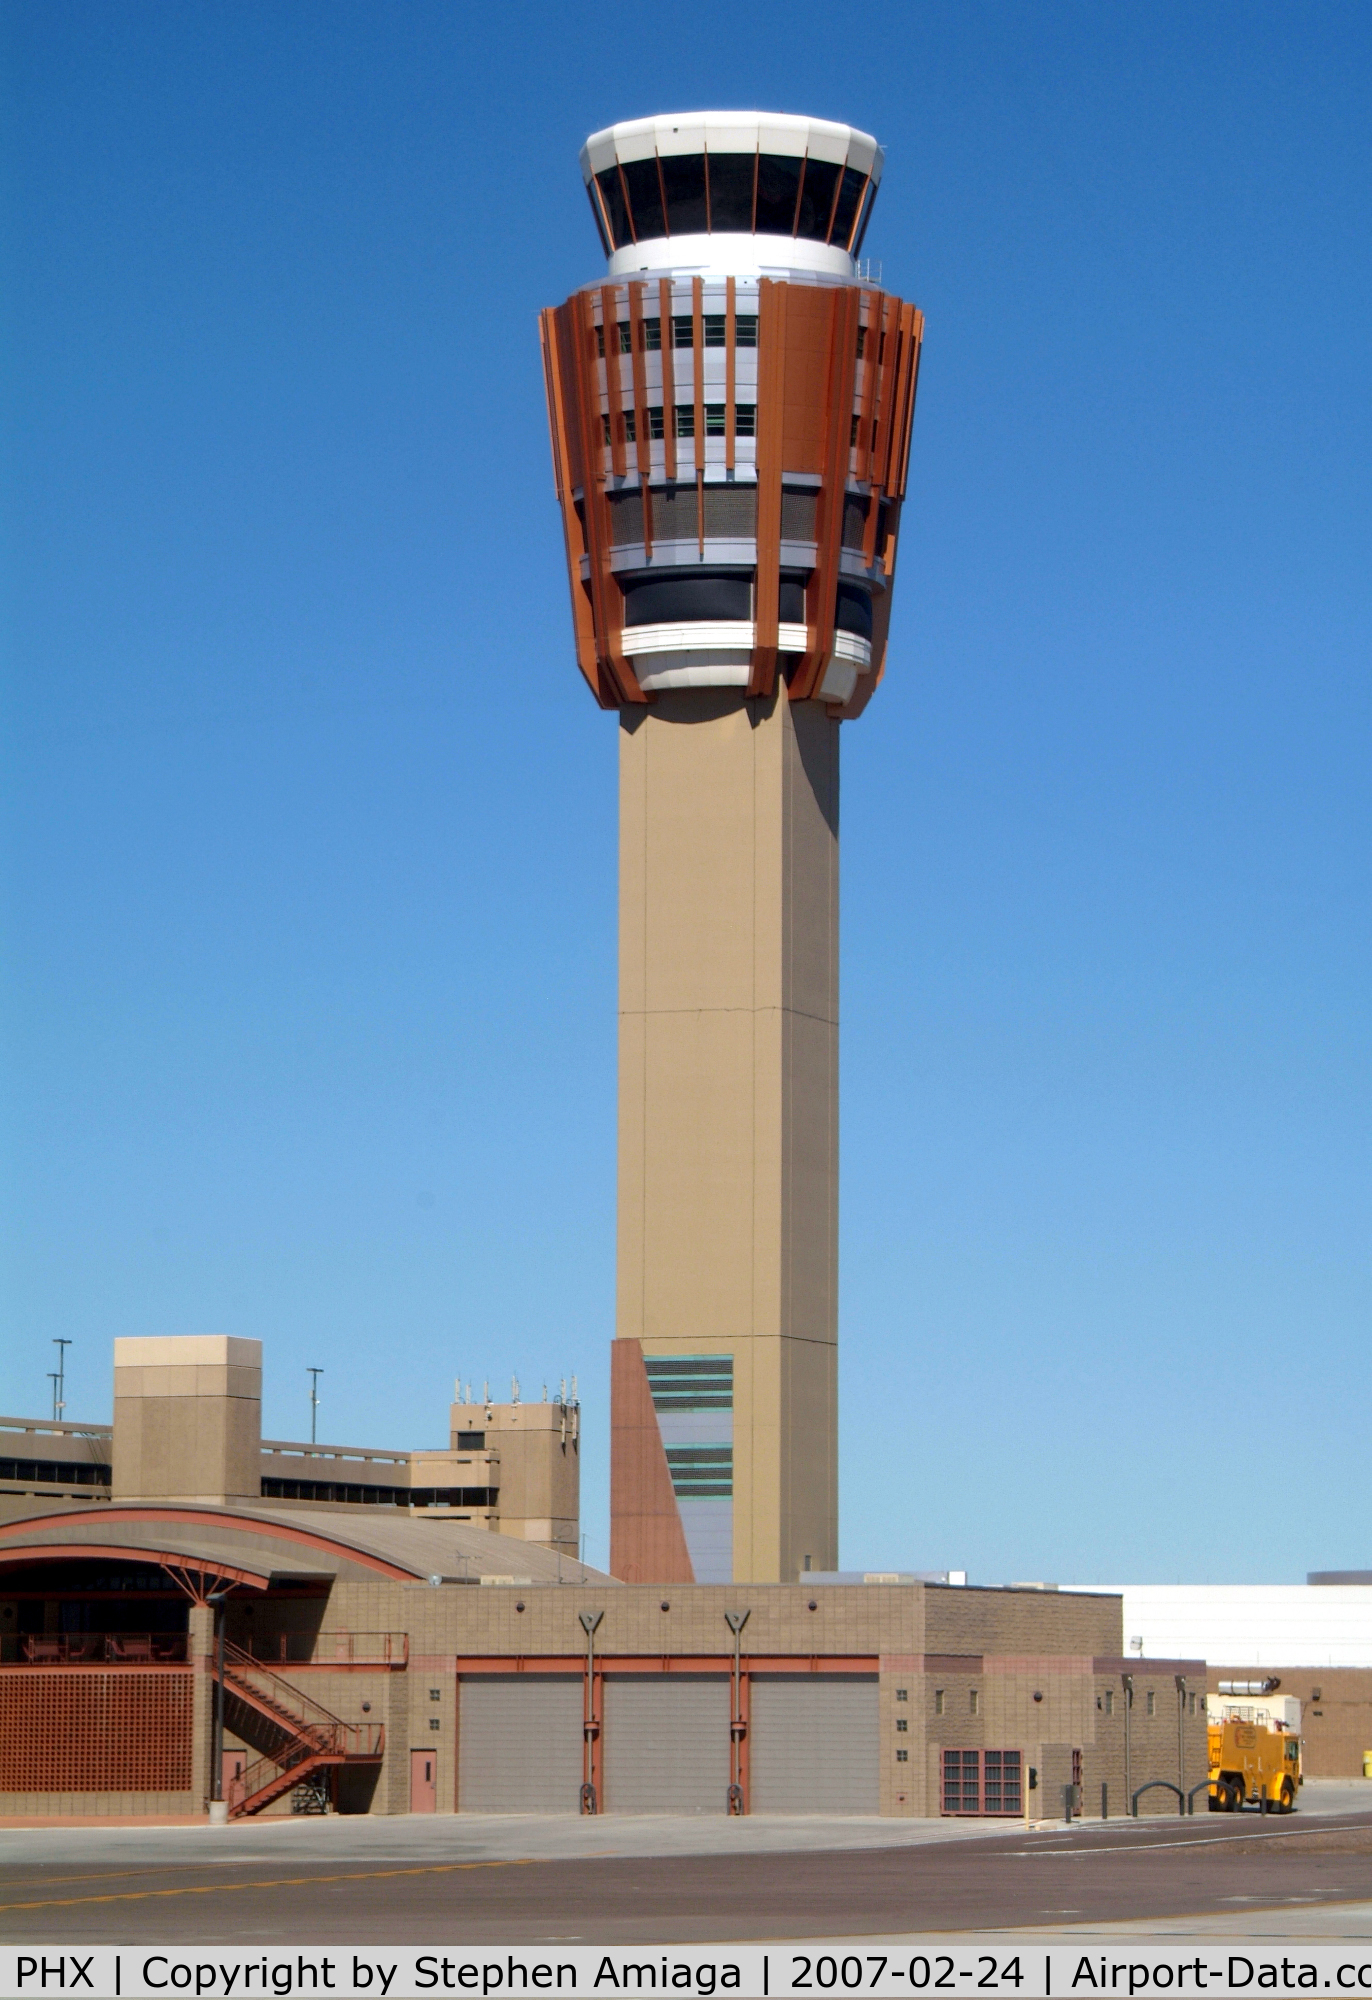 Phoenix Sky Harbor International Airport (PHX) - The new tower before it opened...